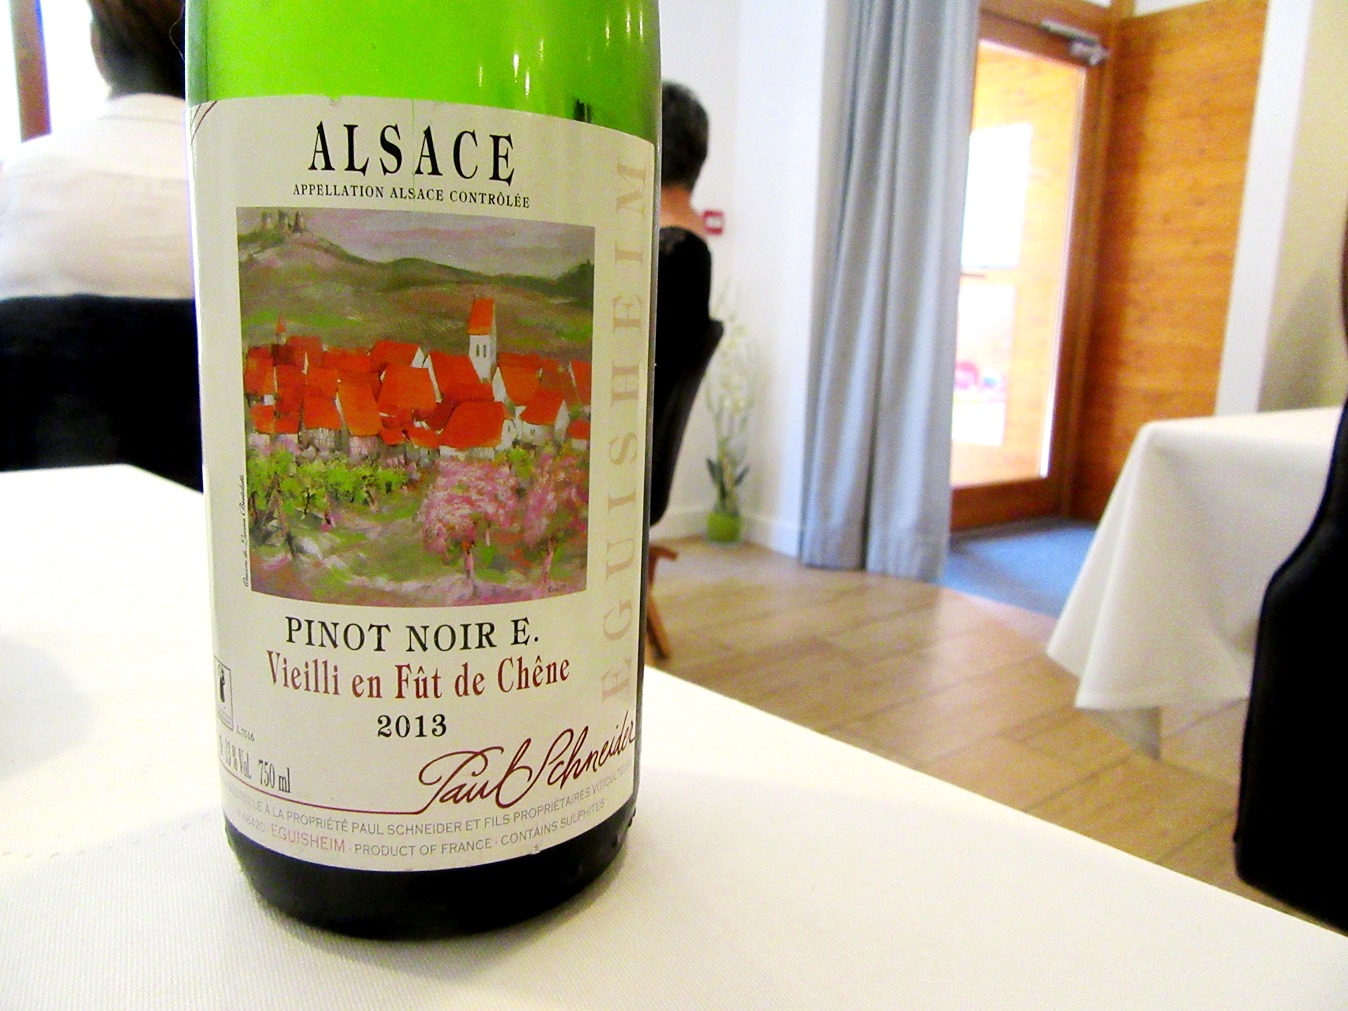 Paul Schneider et Fils, Vieilli en Fût de Chêne Pinot Noir E. 2013, Alsace, France, Wine Casual